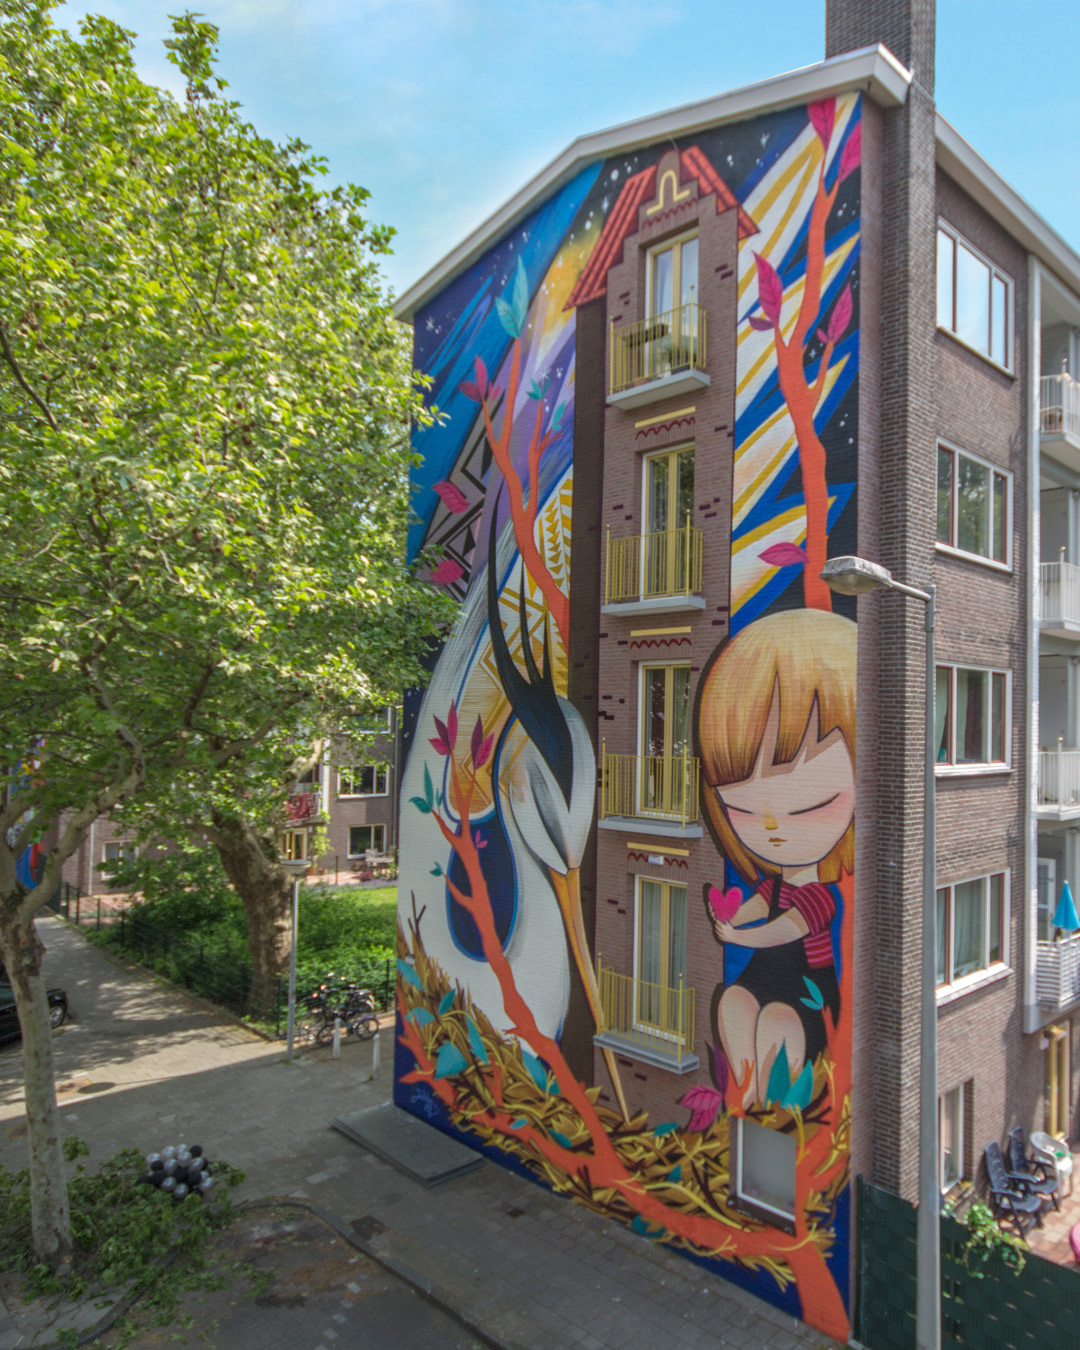 Julieta XLF for "If Walls Could Speak" festival by Amsterdam Street Art Photo Beazarility